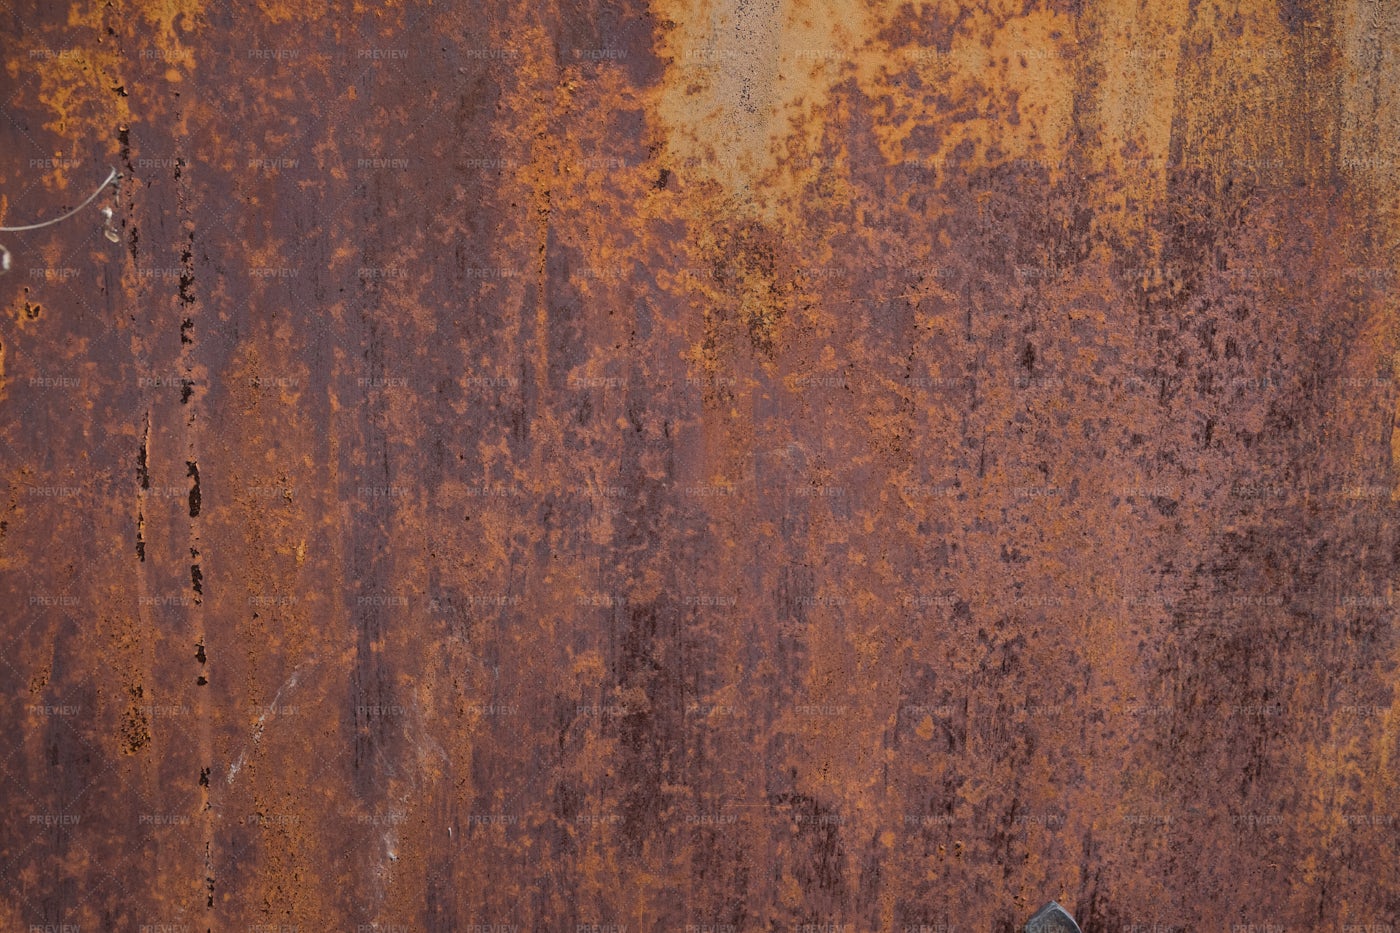 Texture Of A Rusty Sheet Of Iron Stock Photos Motion Array